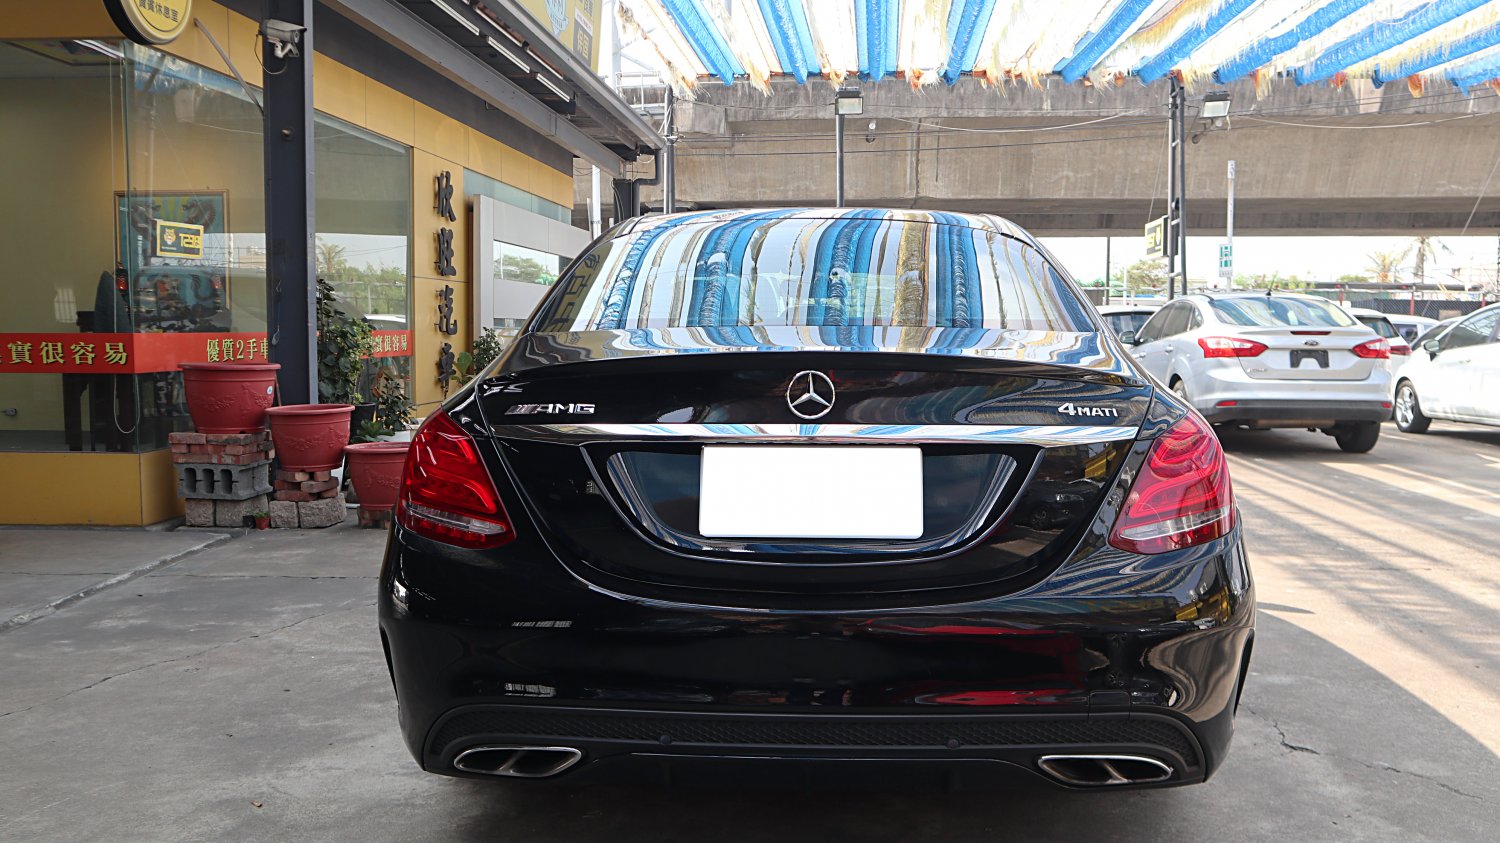 Benz 賓士 ／ C-Class ／ 2015年 ／ 2015年Benz C300 黑色 AMG 賓士中古車 ／ TA北安店(台南)